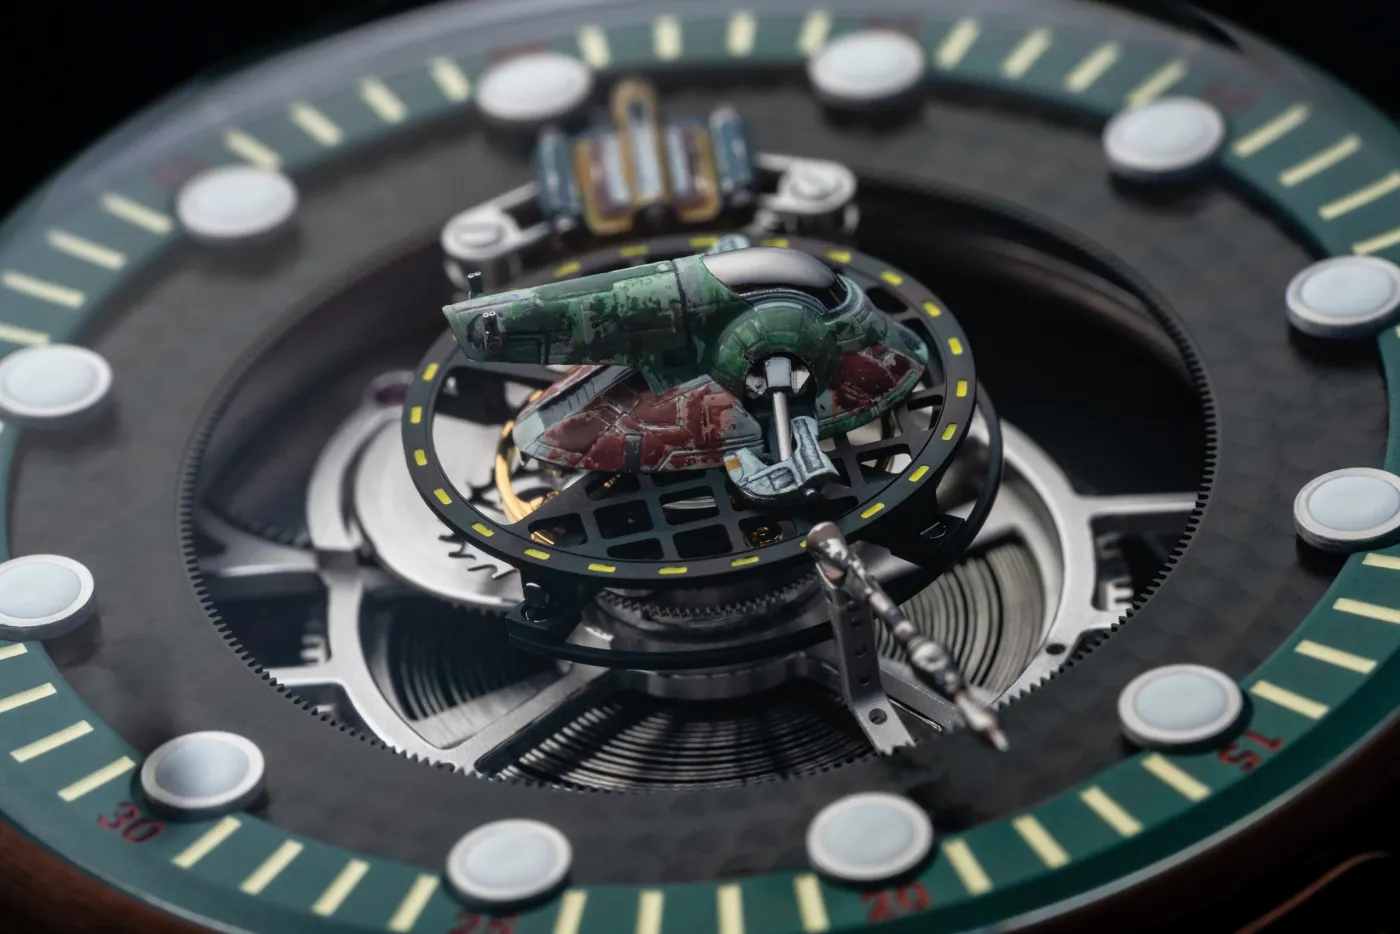 Limited Edition Boba Fett-Inspired Tourbillon Wristwatch